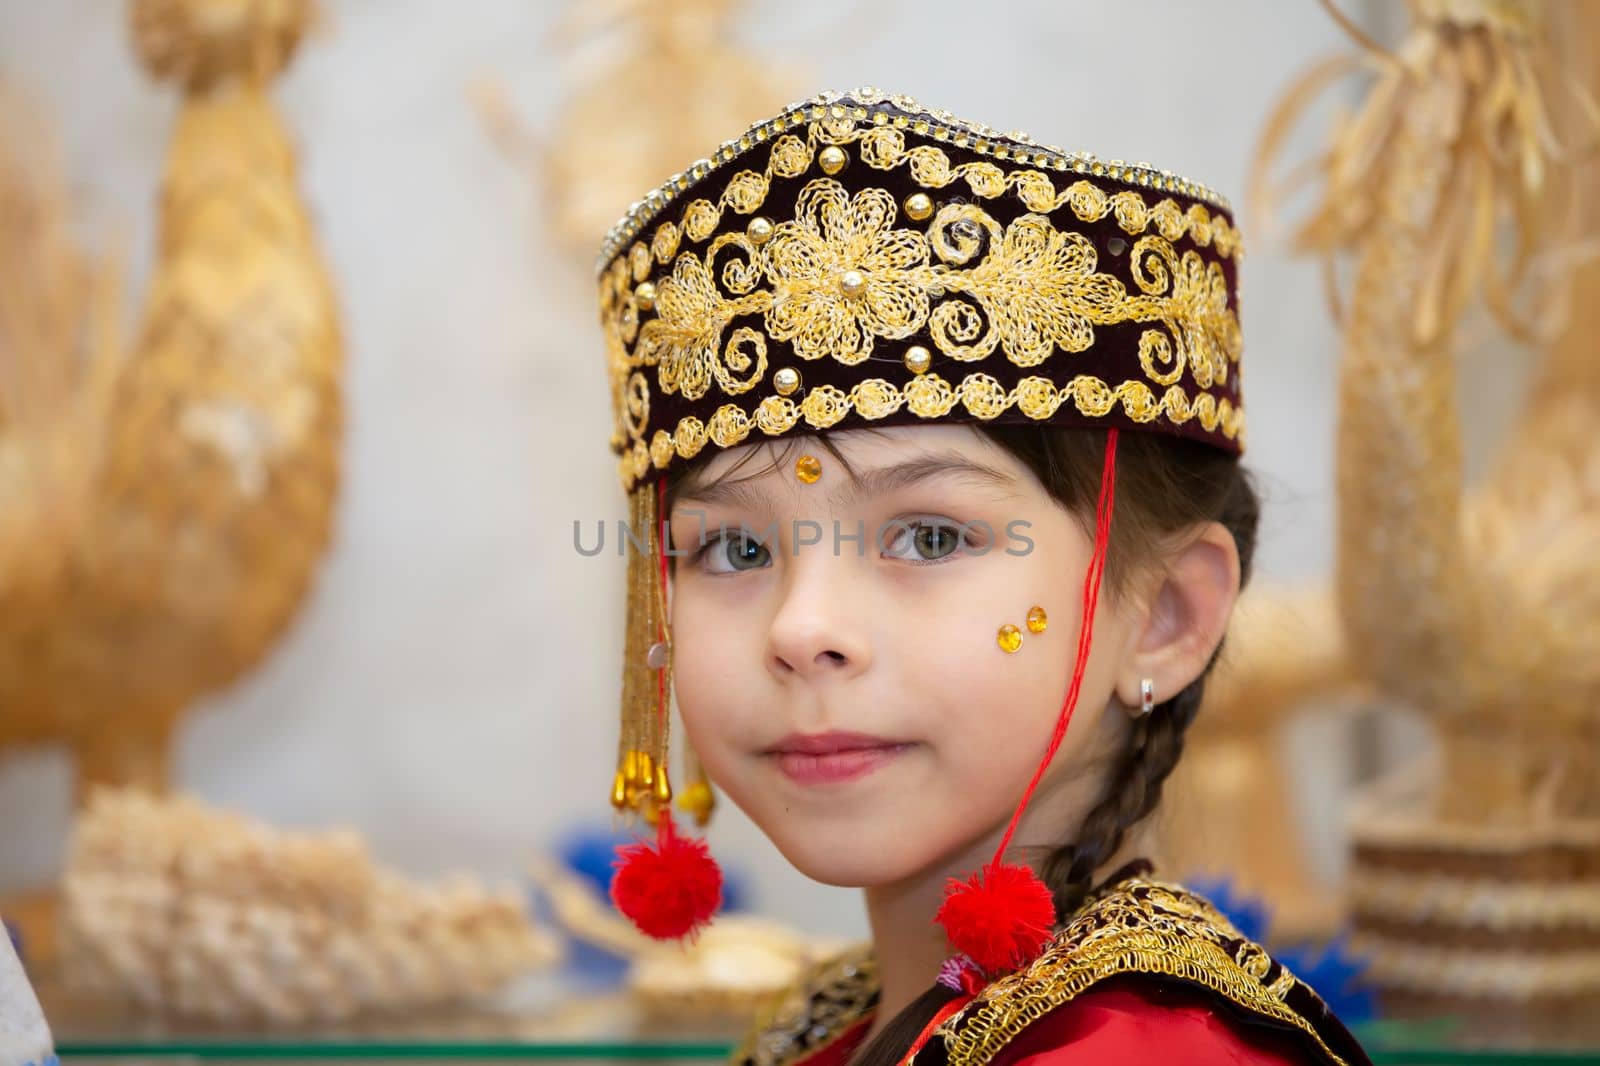 Belarus, city of Gomel, May 21, 2021 Children's holiday in the city. A little girl in the Uzbek national headdress.